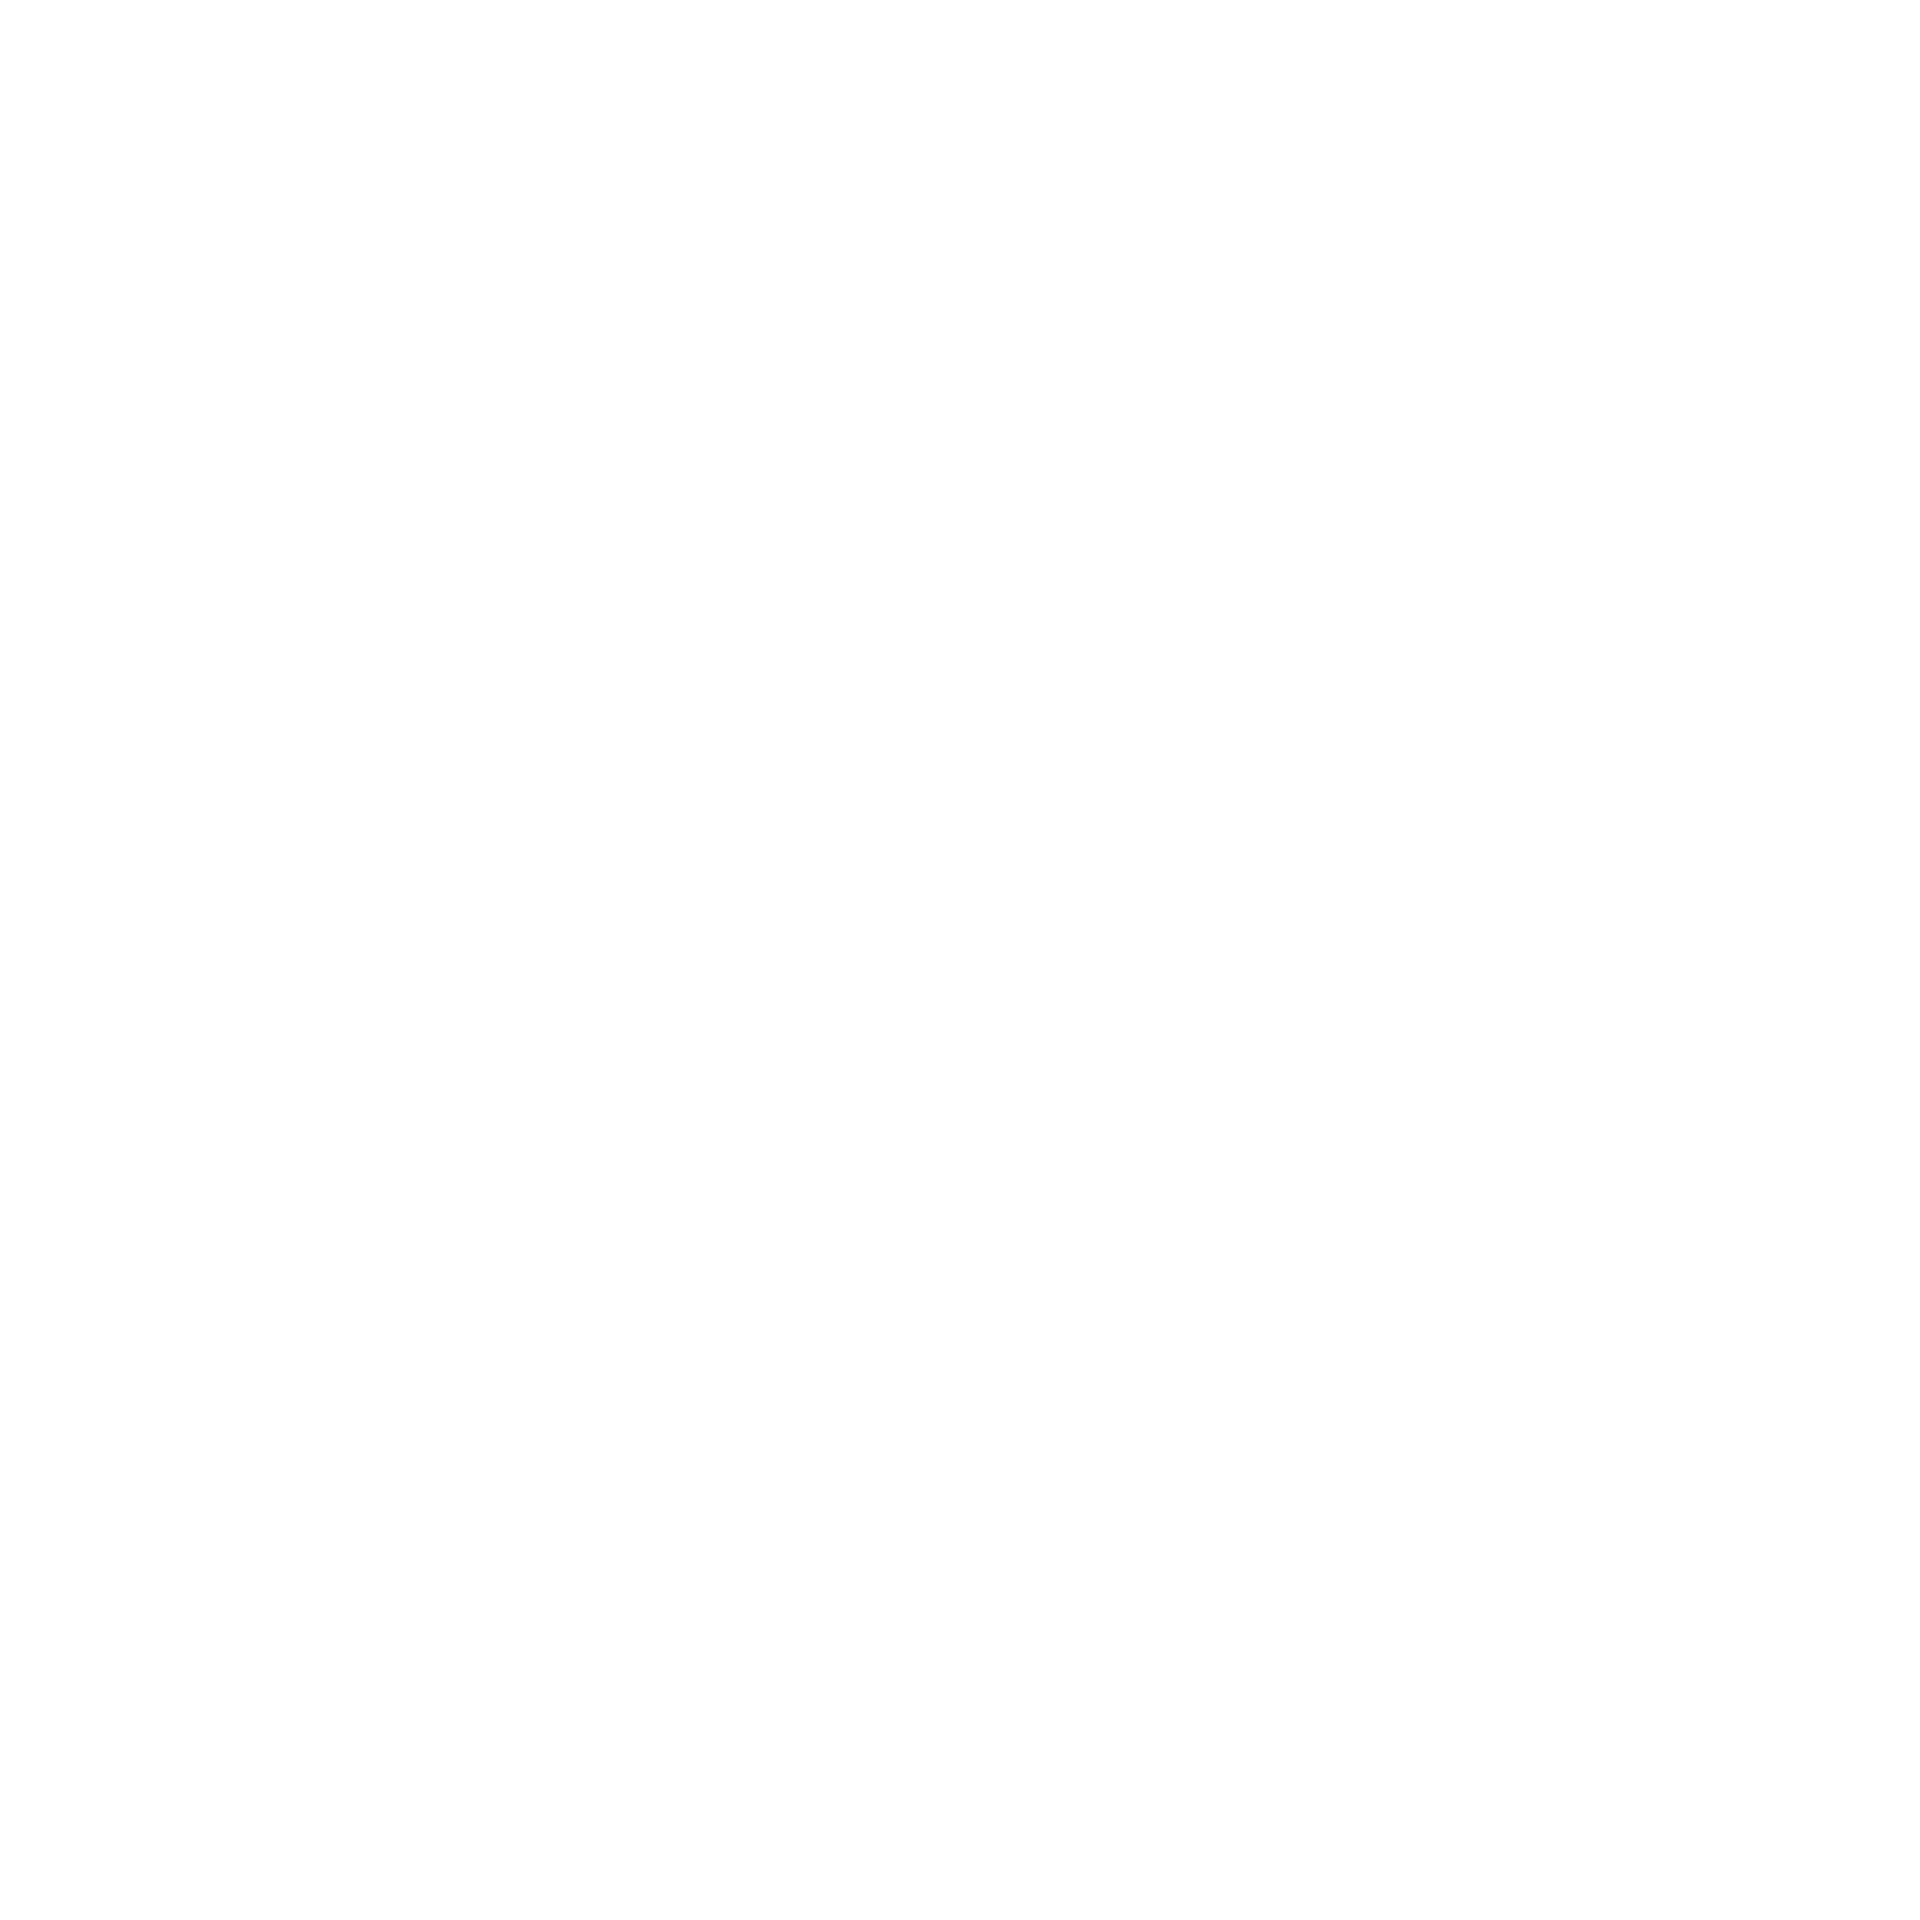 hipaa-logo